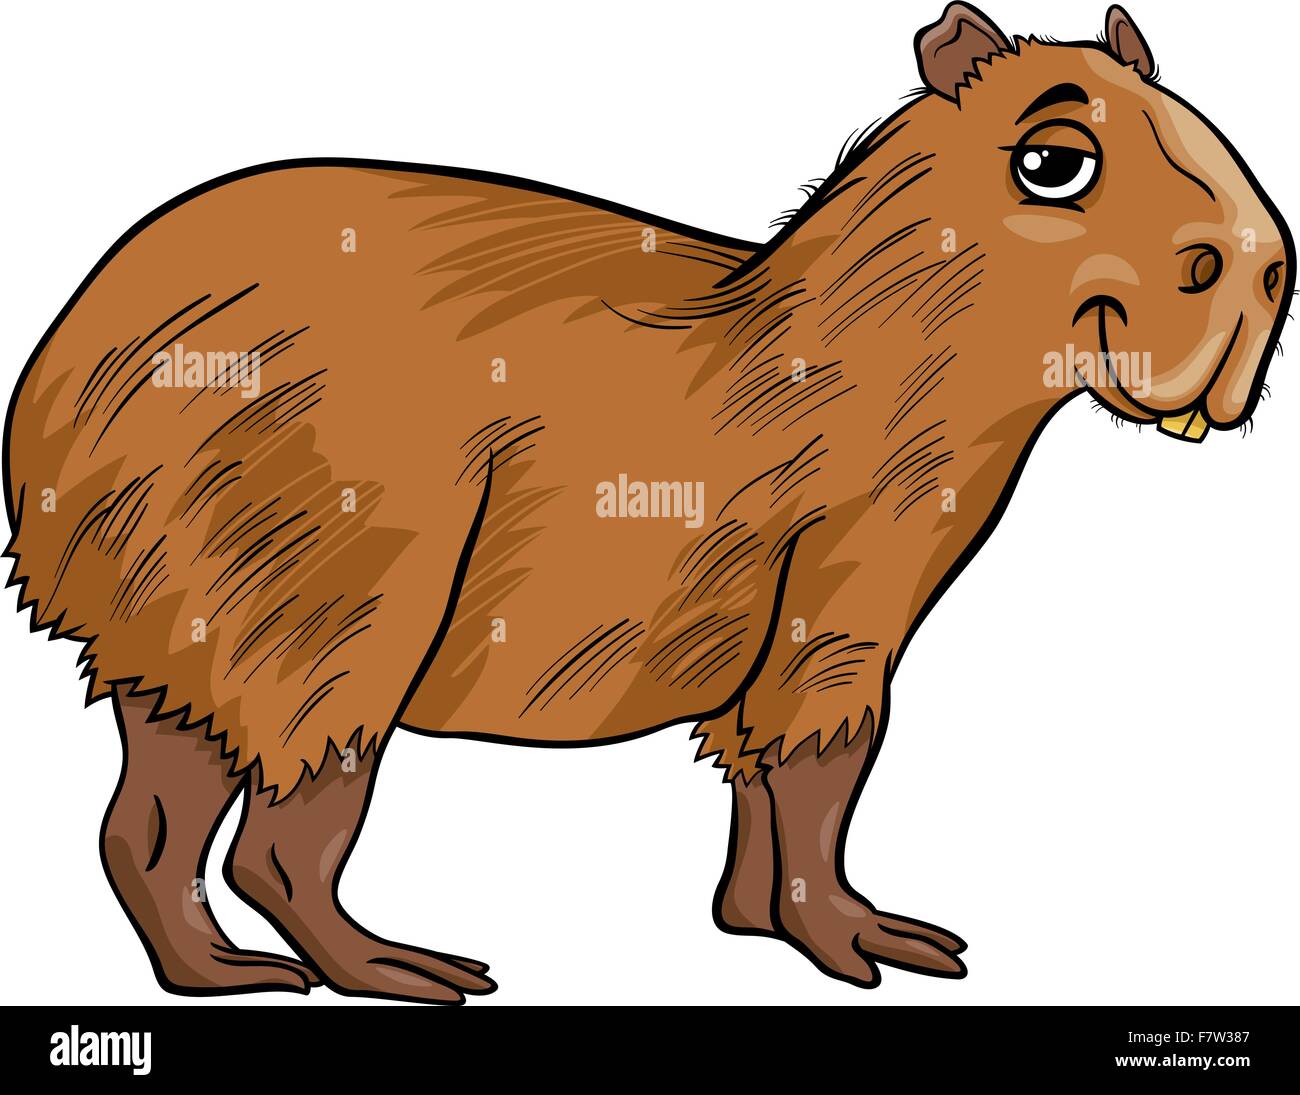 capybara animal cartoon illustration Stock Vector